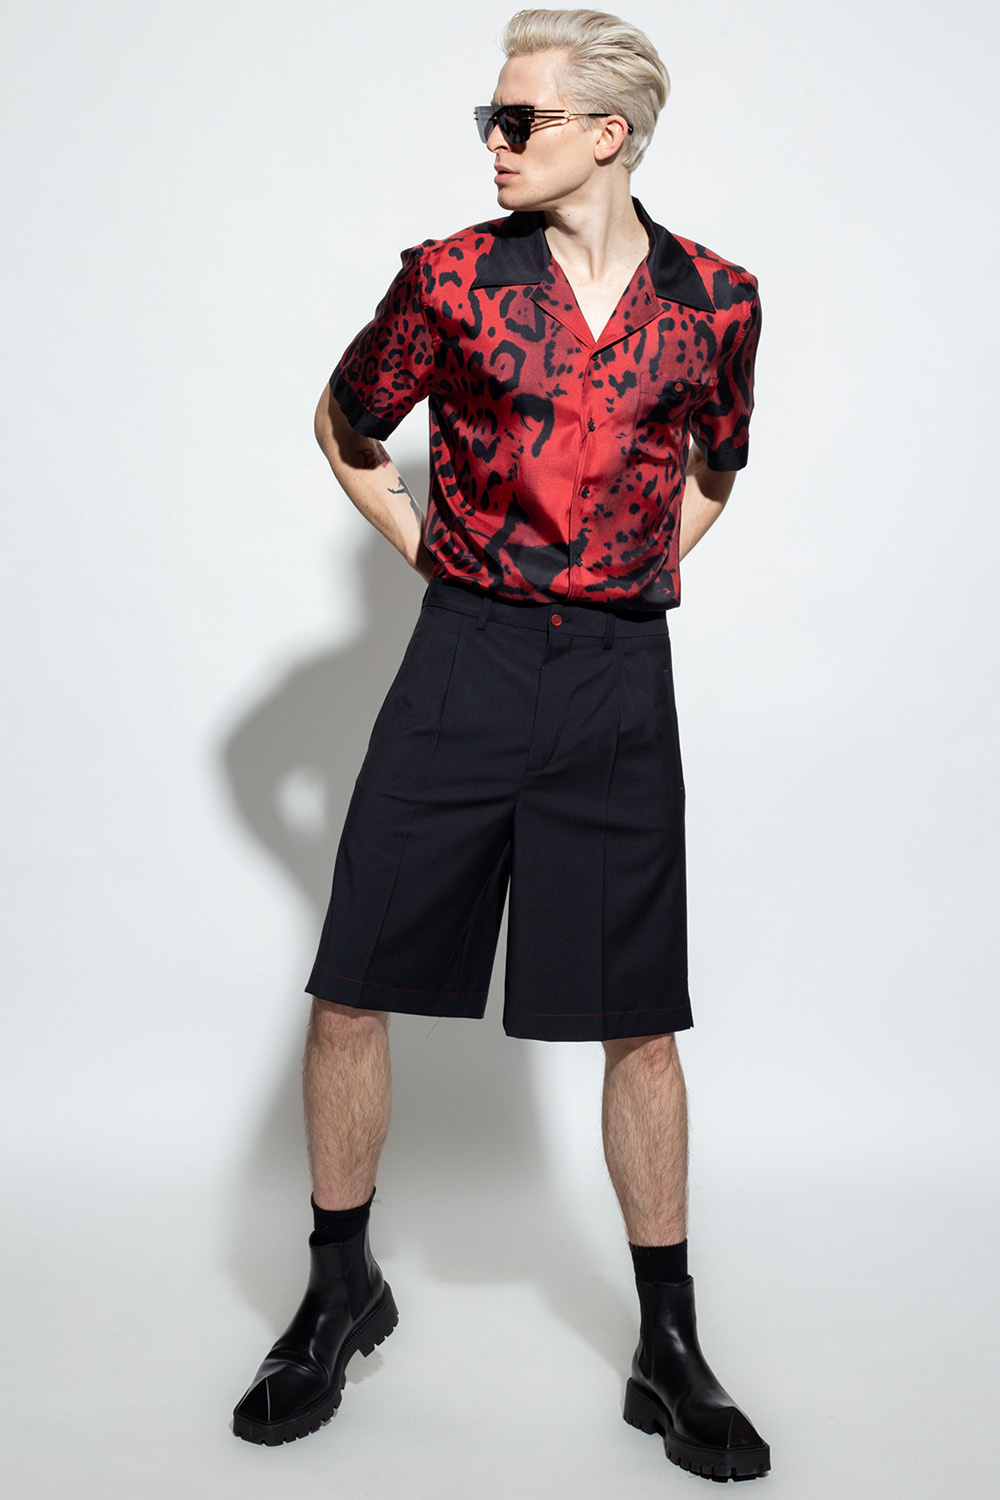 Dolce & Gabbana Pleat-front shorts